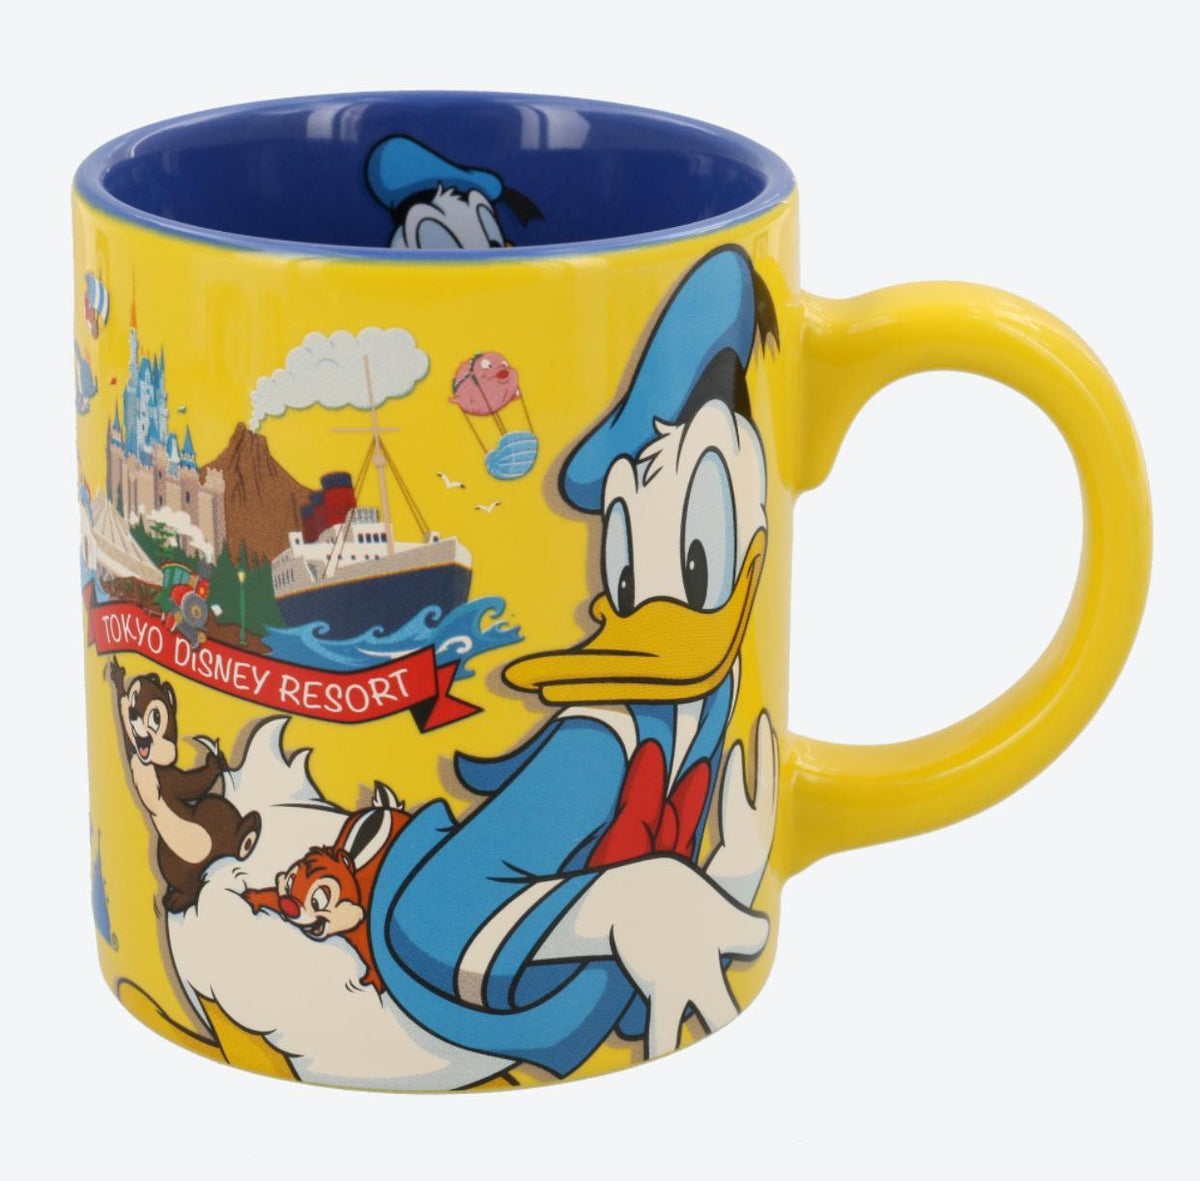 SHDL - Mug x Donald Duck I'm Not Moving! — USShoppingSOS